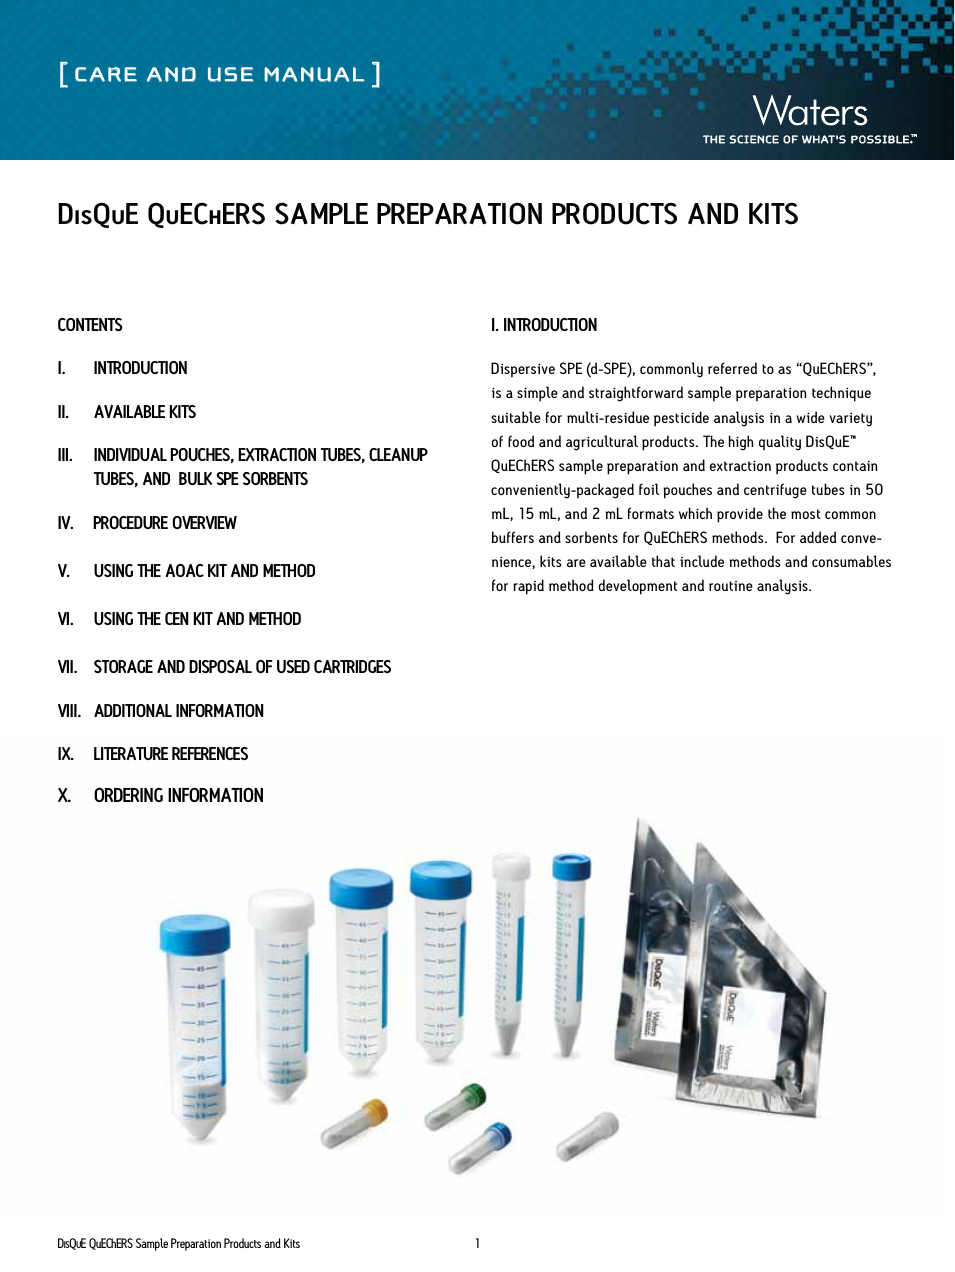 DisQuE Dispersive Sample Preparation Kit